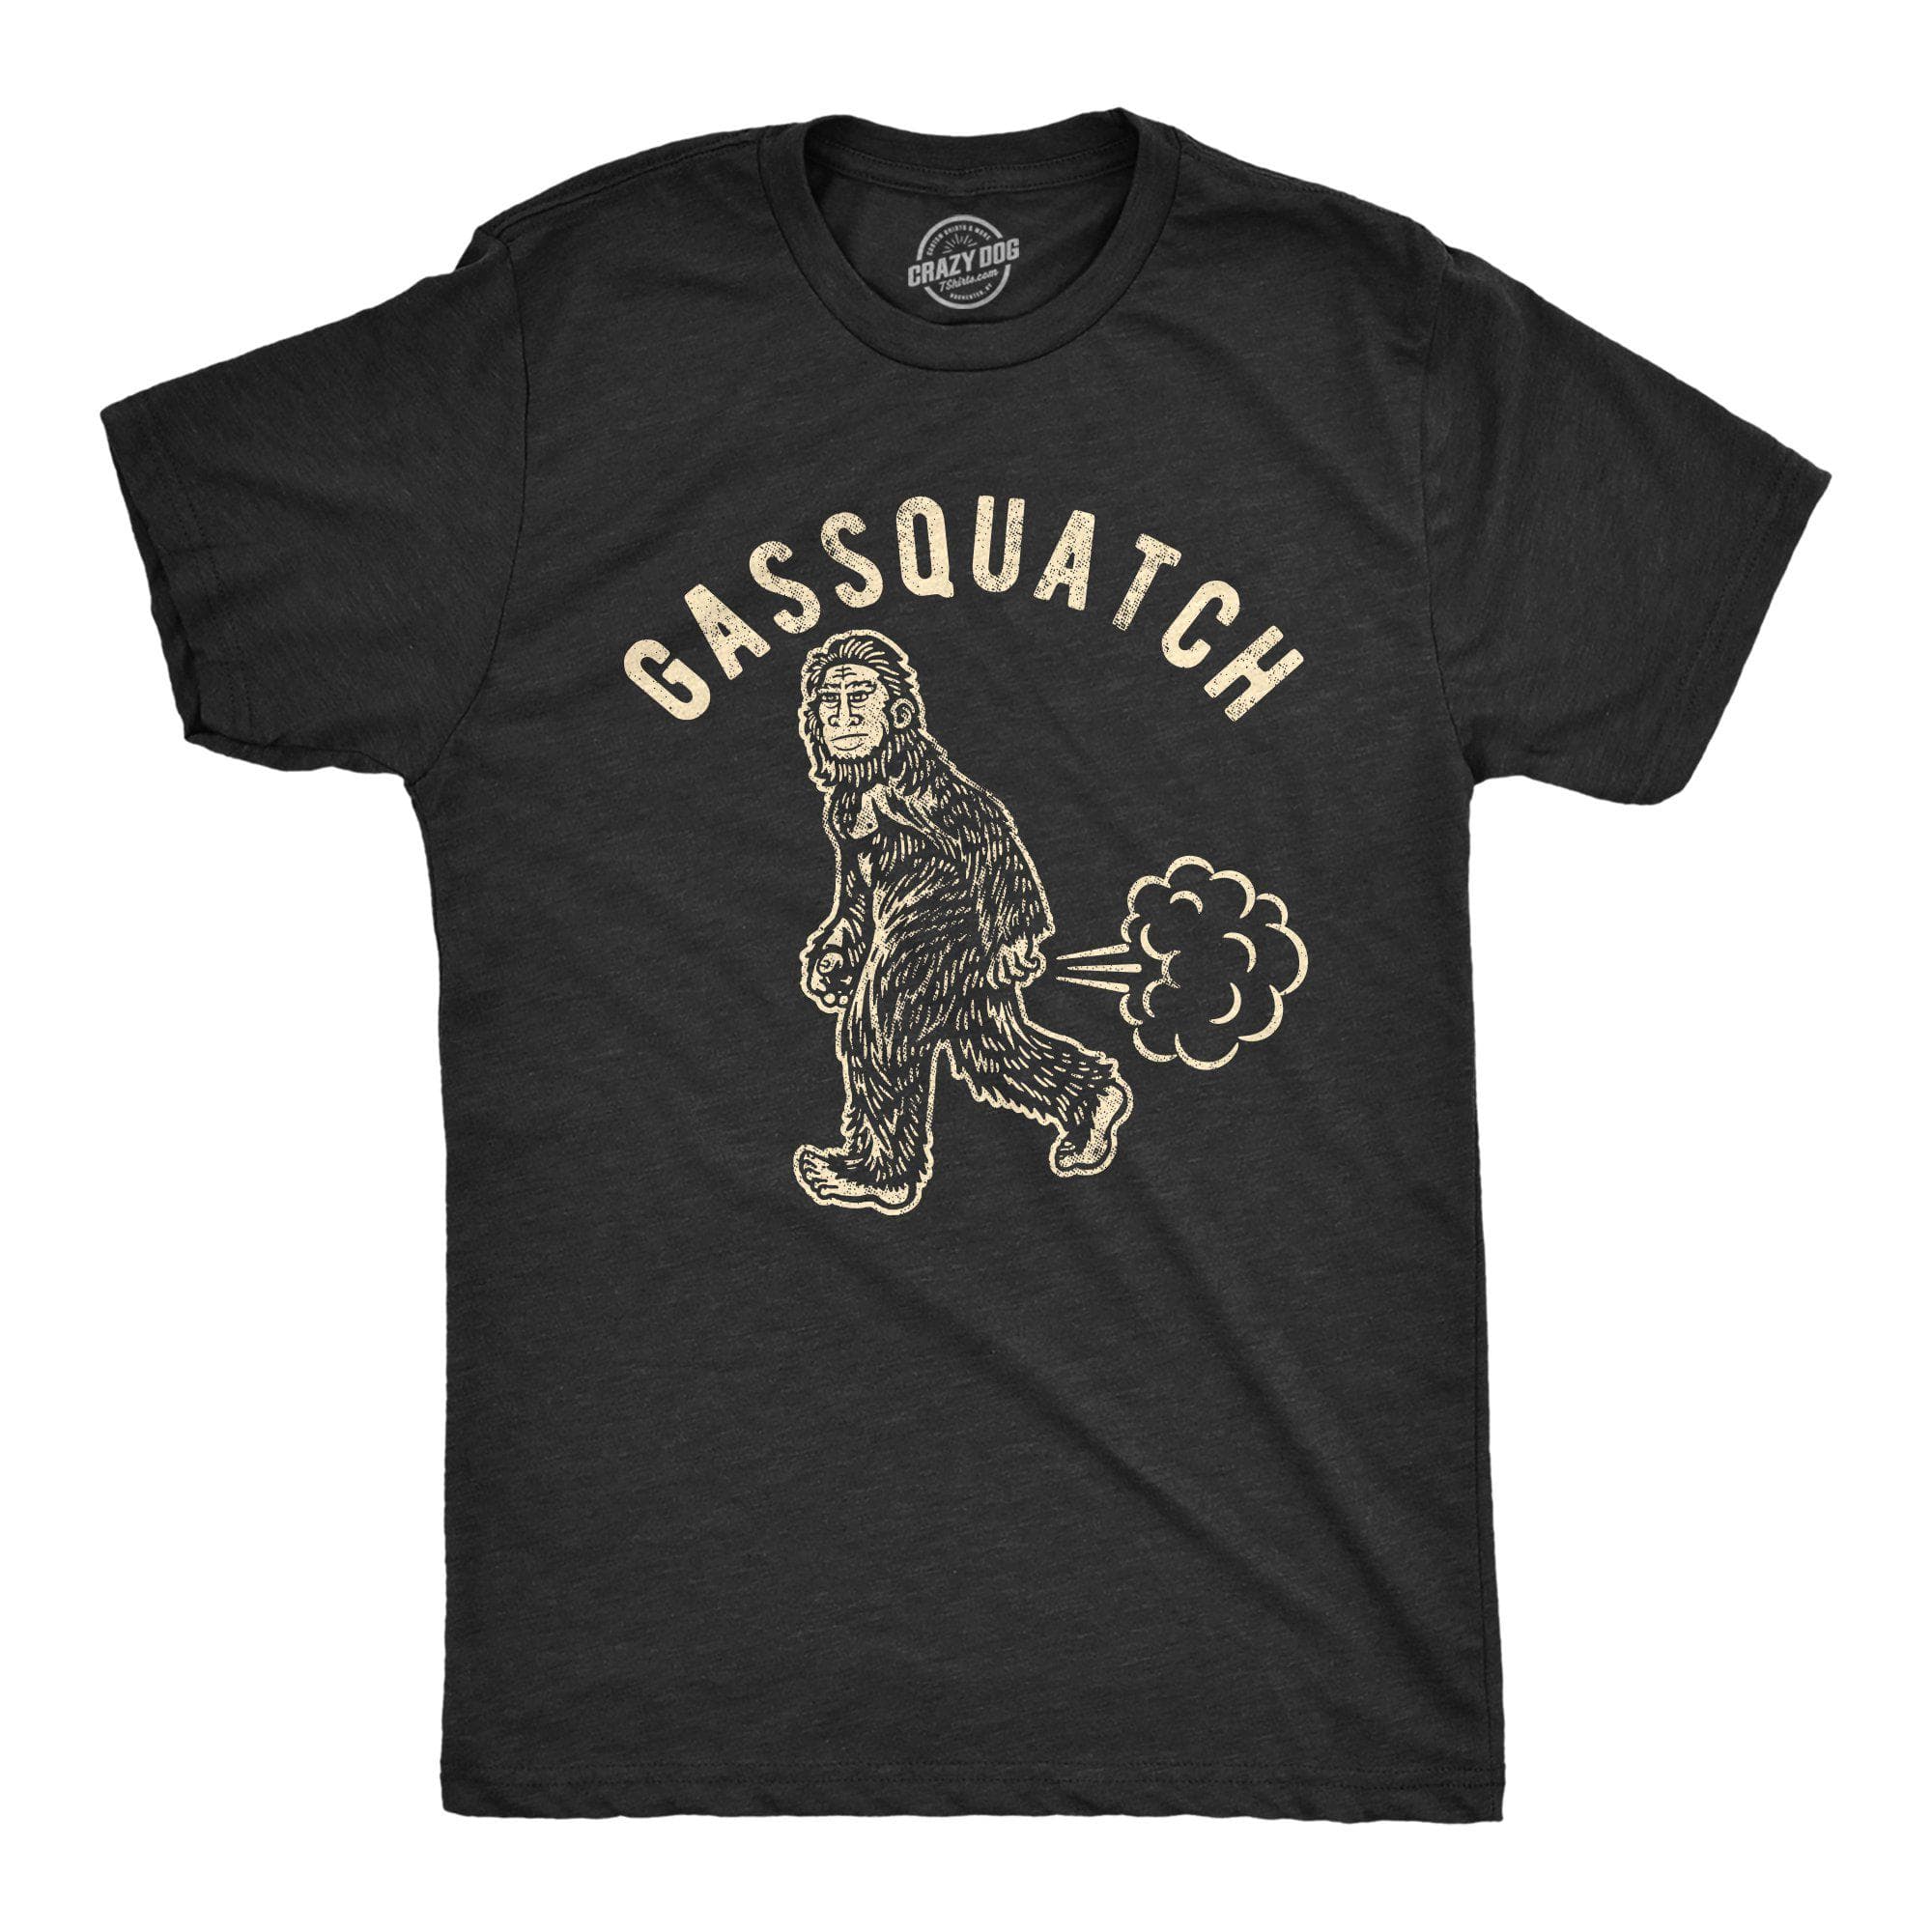 Gassquatch Men's Tshirt - Crazy Dog T-Shirts